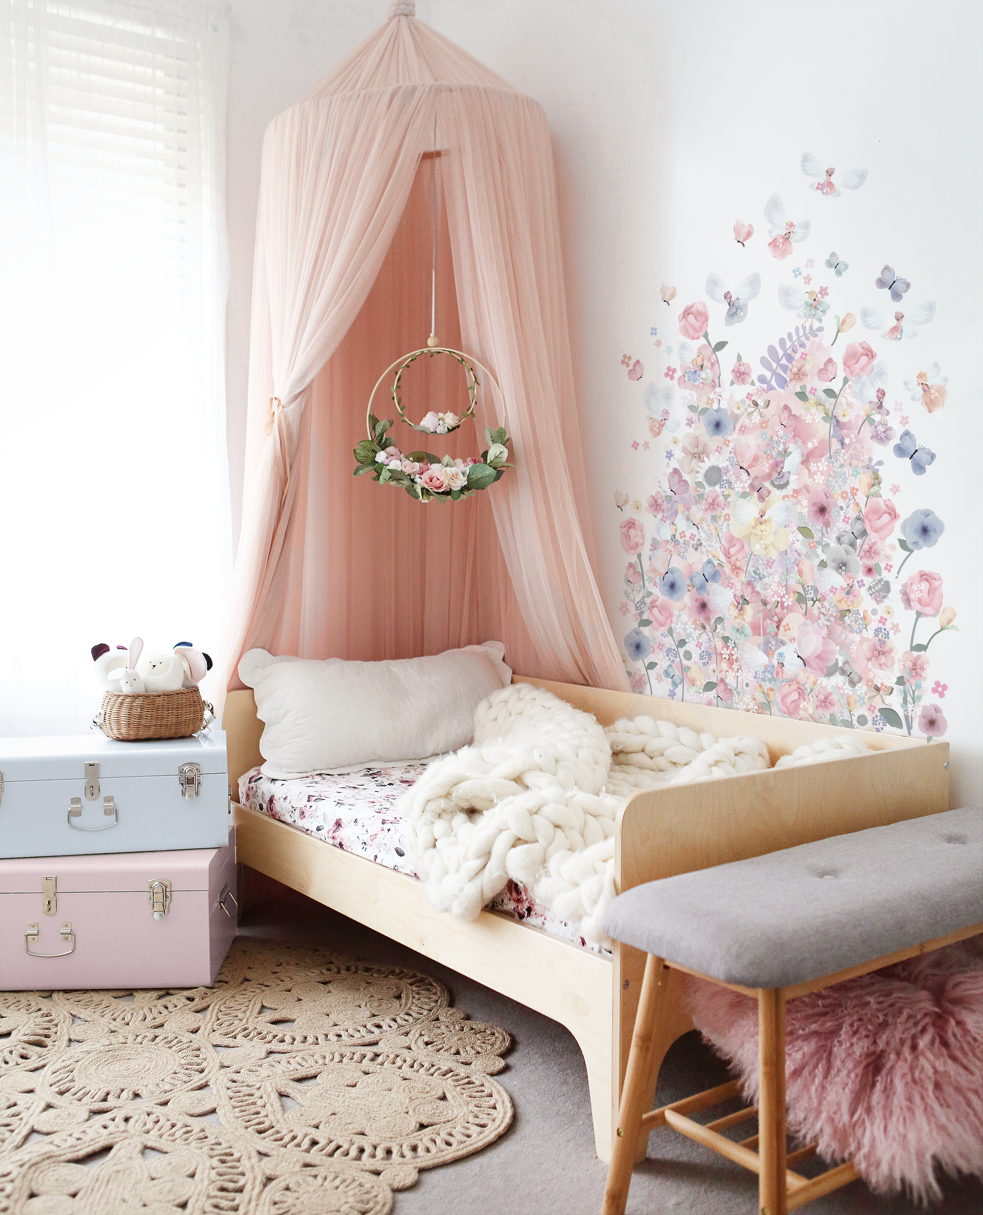 Fairy Garden Wall Sticker - Tutu Irresistible Boutique - For Girls Bedroom